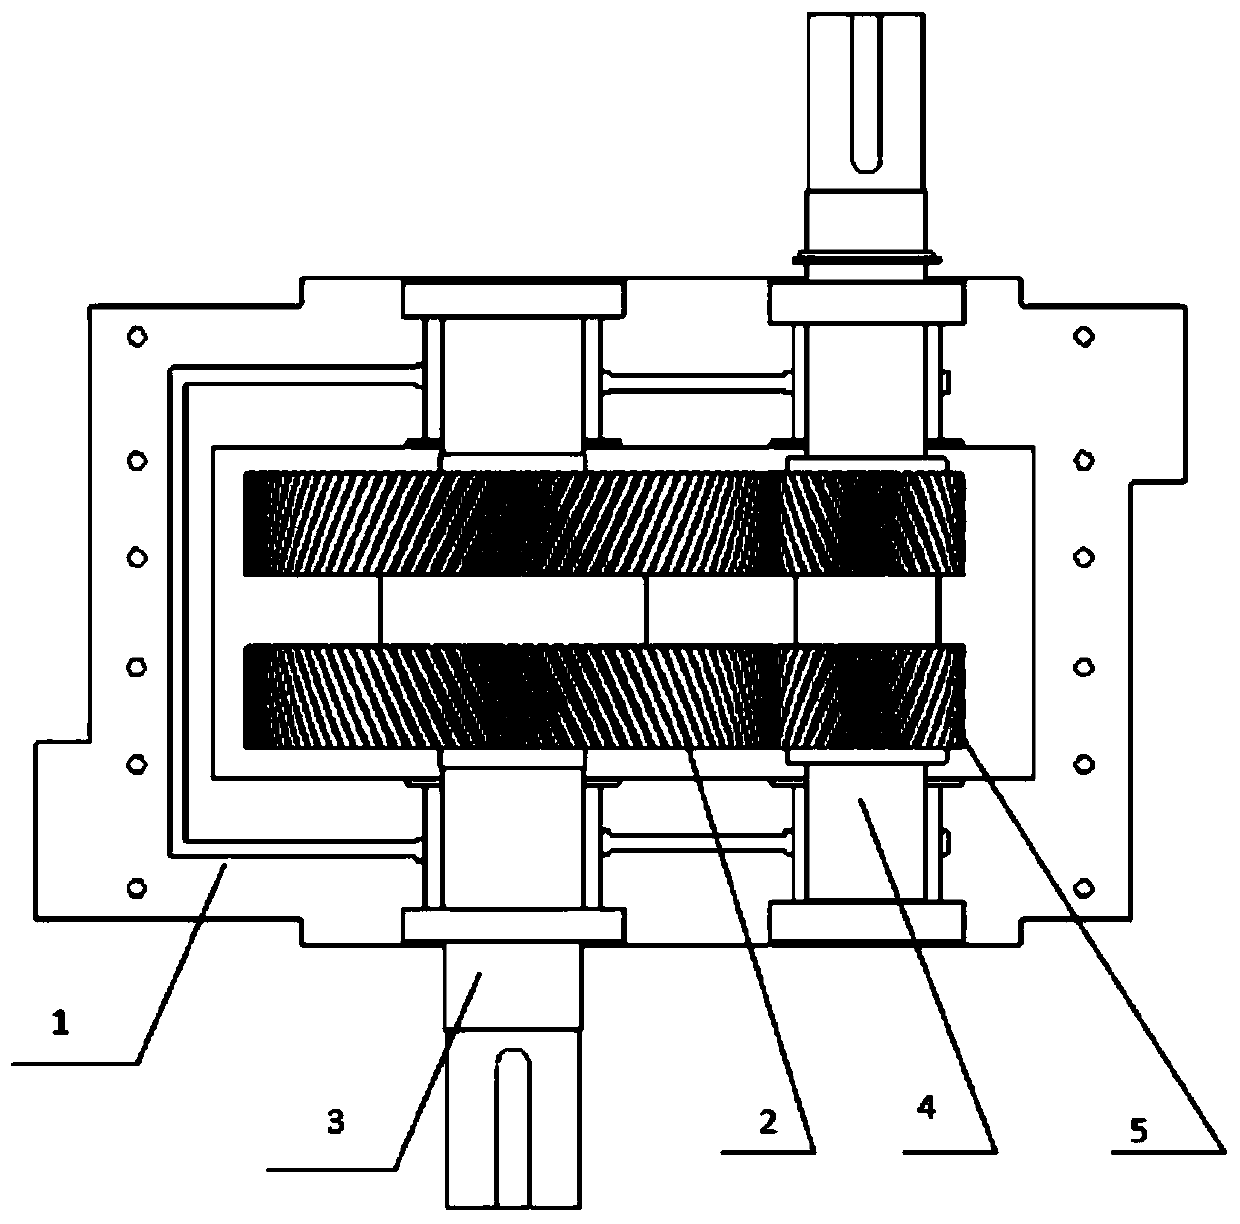 Dynamics modeling method for multi-input multi-output gear transmission system